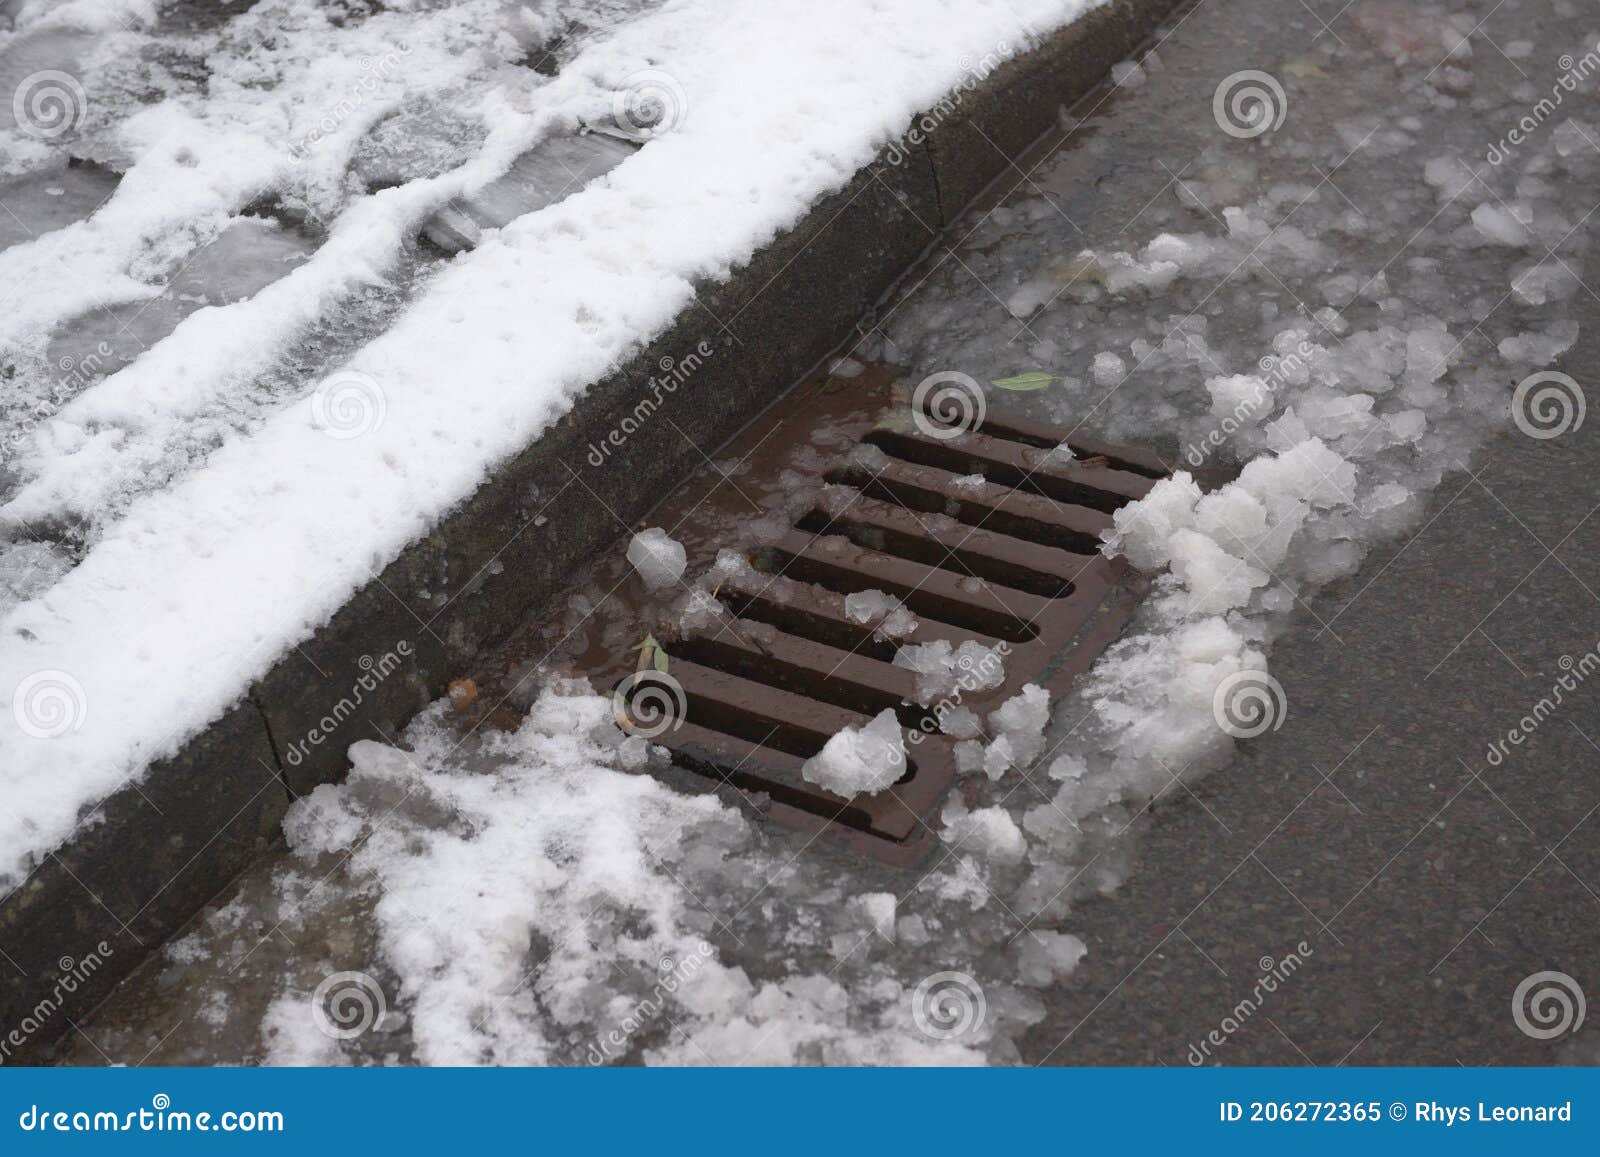 4 - rapidly melting snowfall runs into roadside surface drain